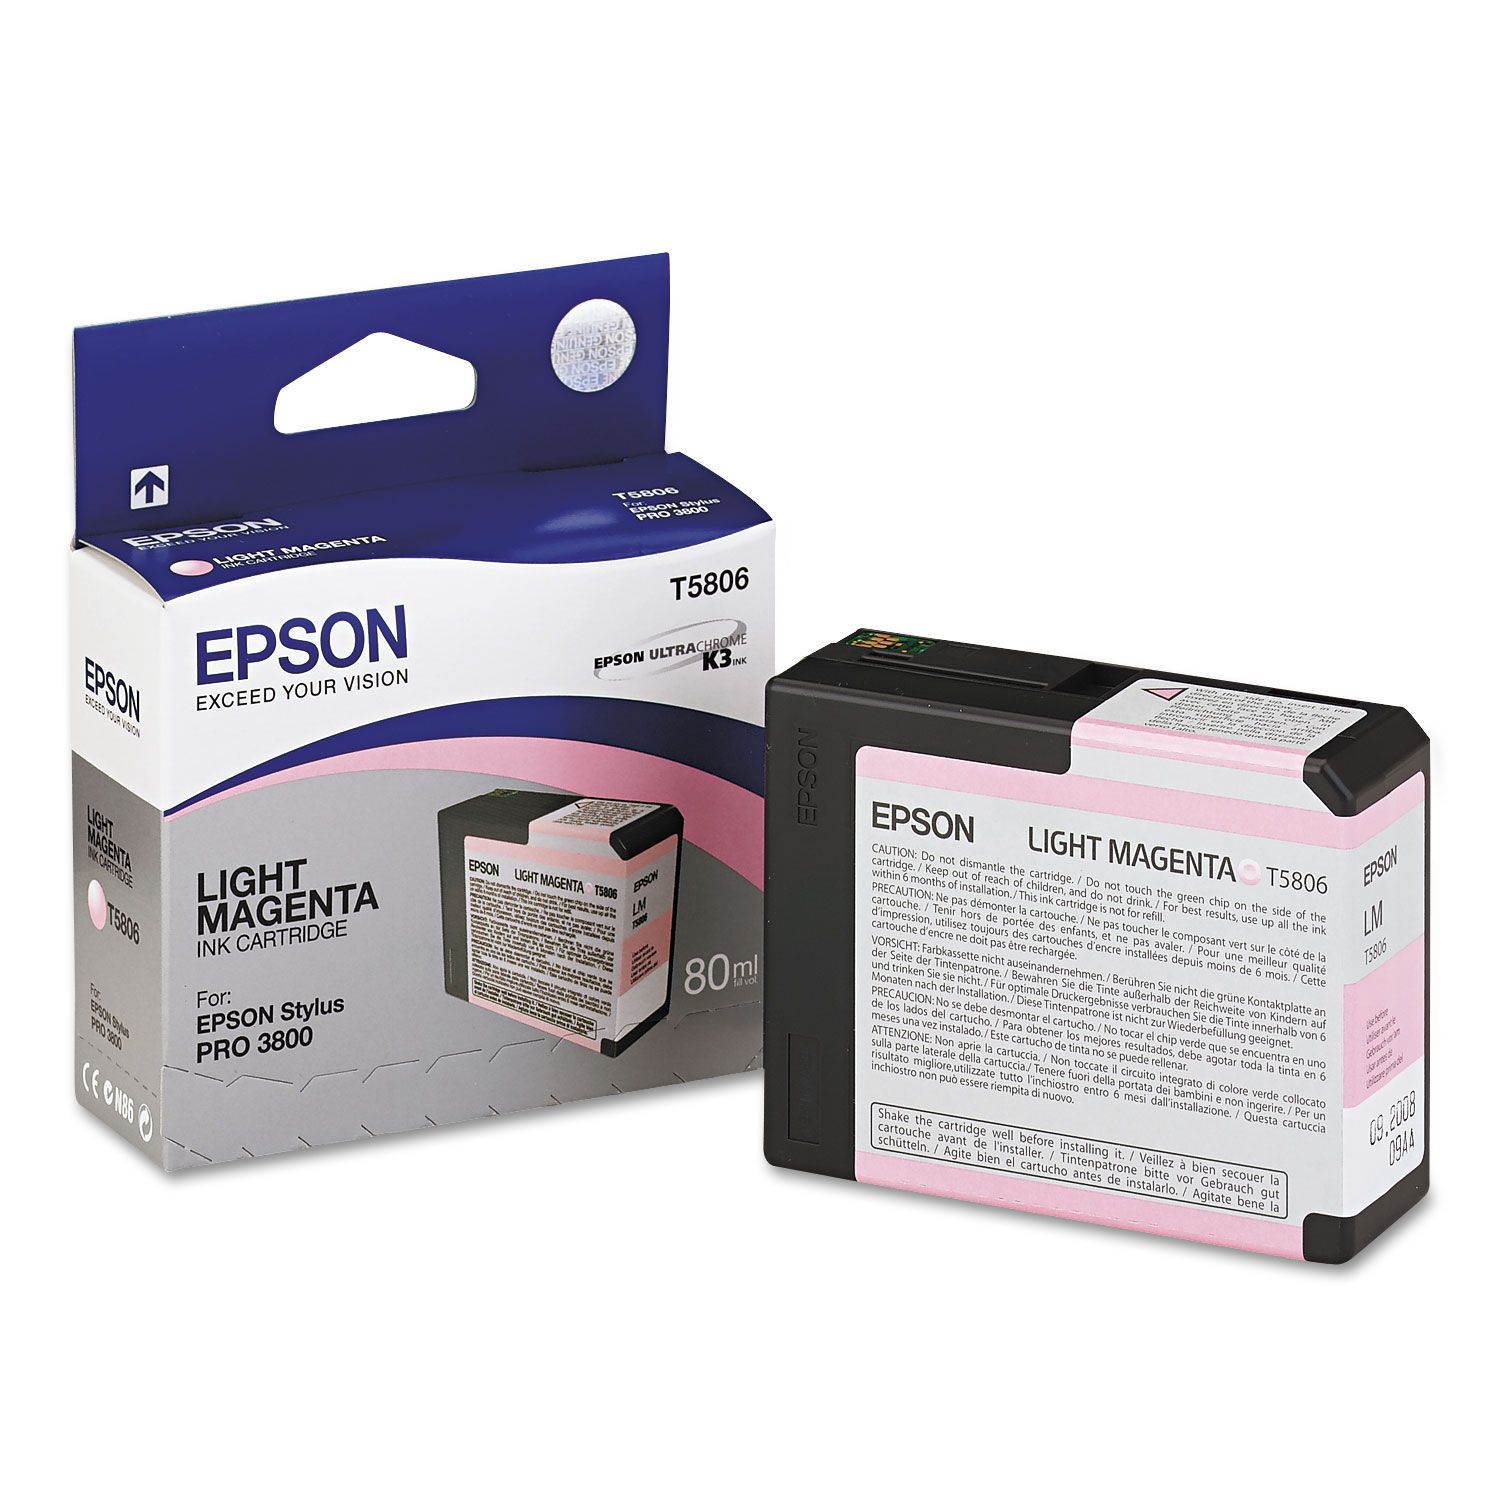 Absolute Toner Epson Original Genuine OEM Light Magenta Ink Cartridge | T580600 Original Epson Cartridge